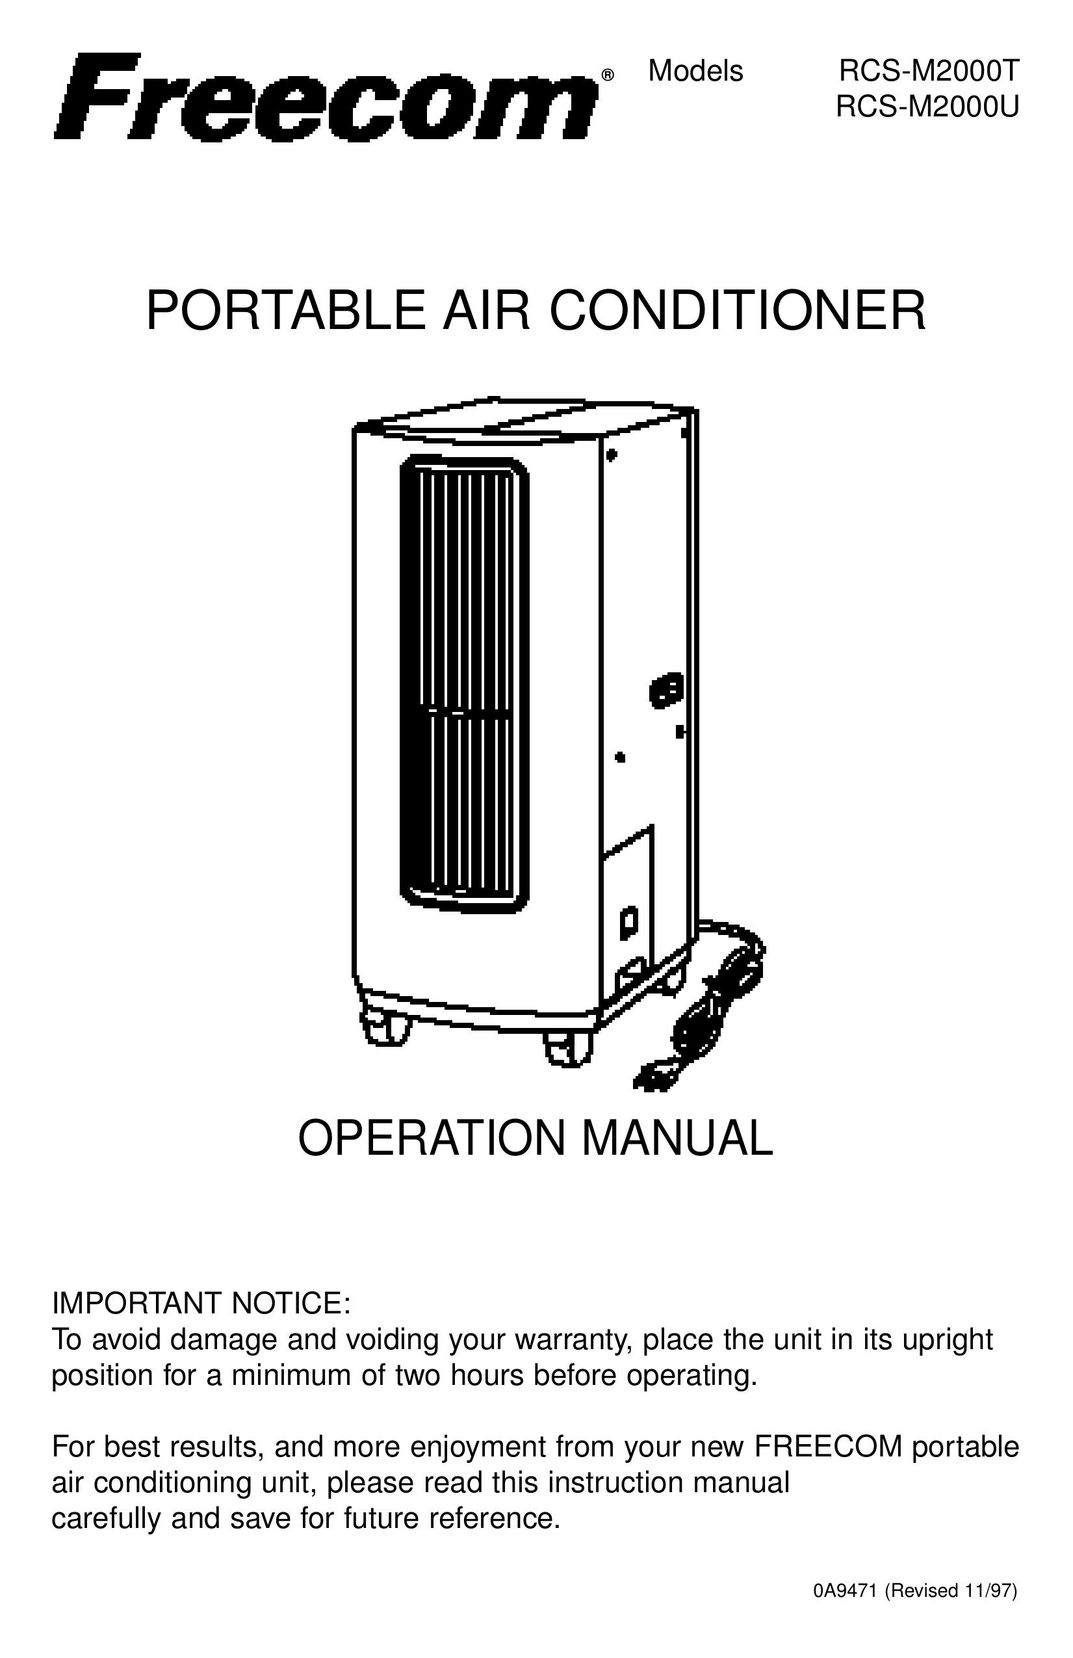 Freecom Technologies RCS-M2000U Air Conditioner User Manual